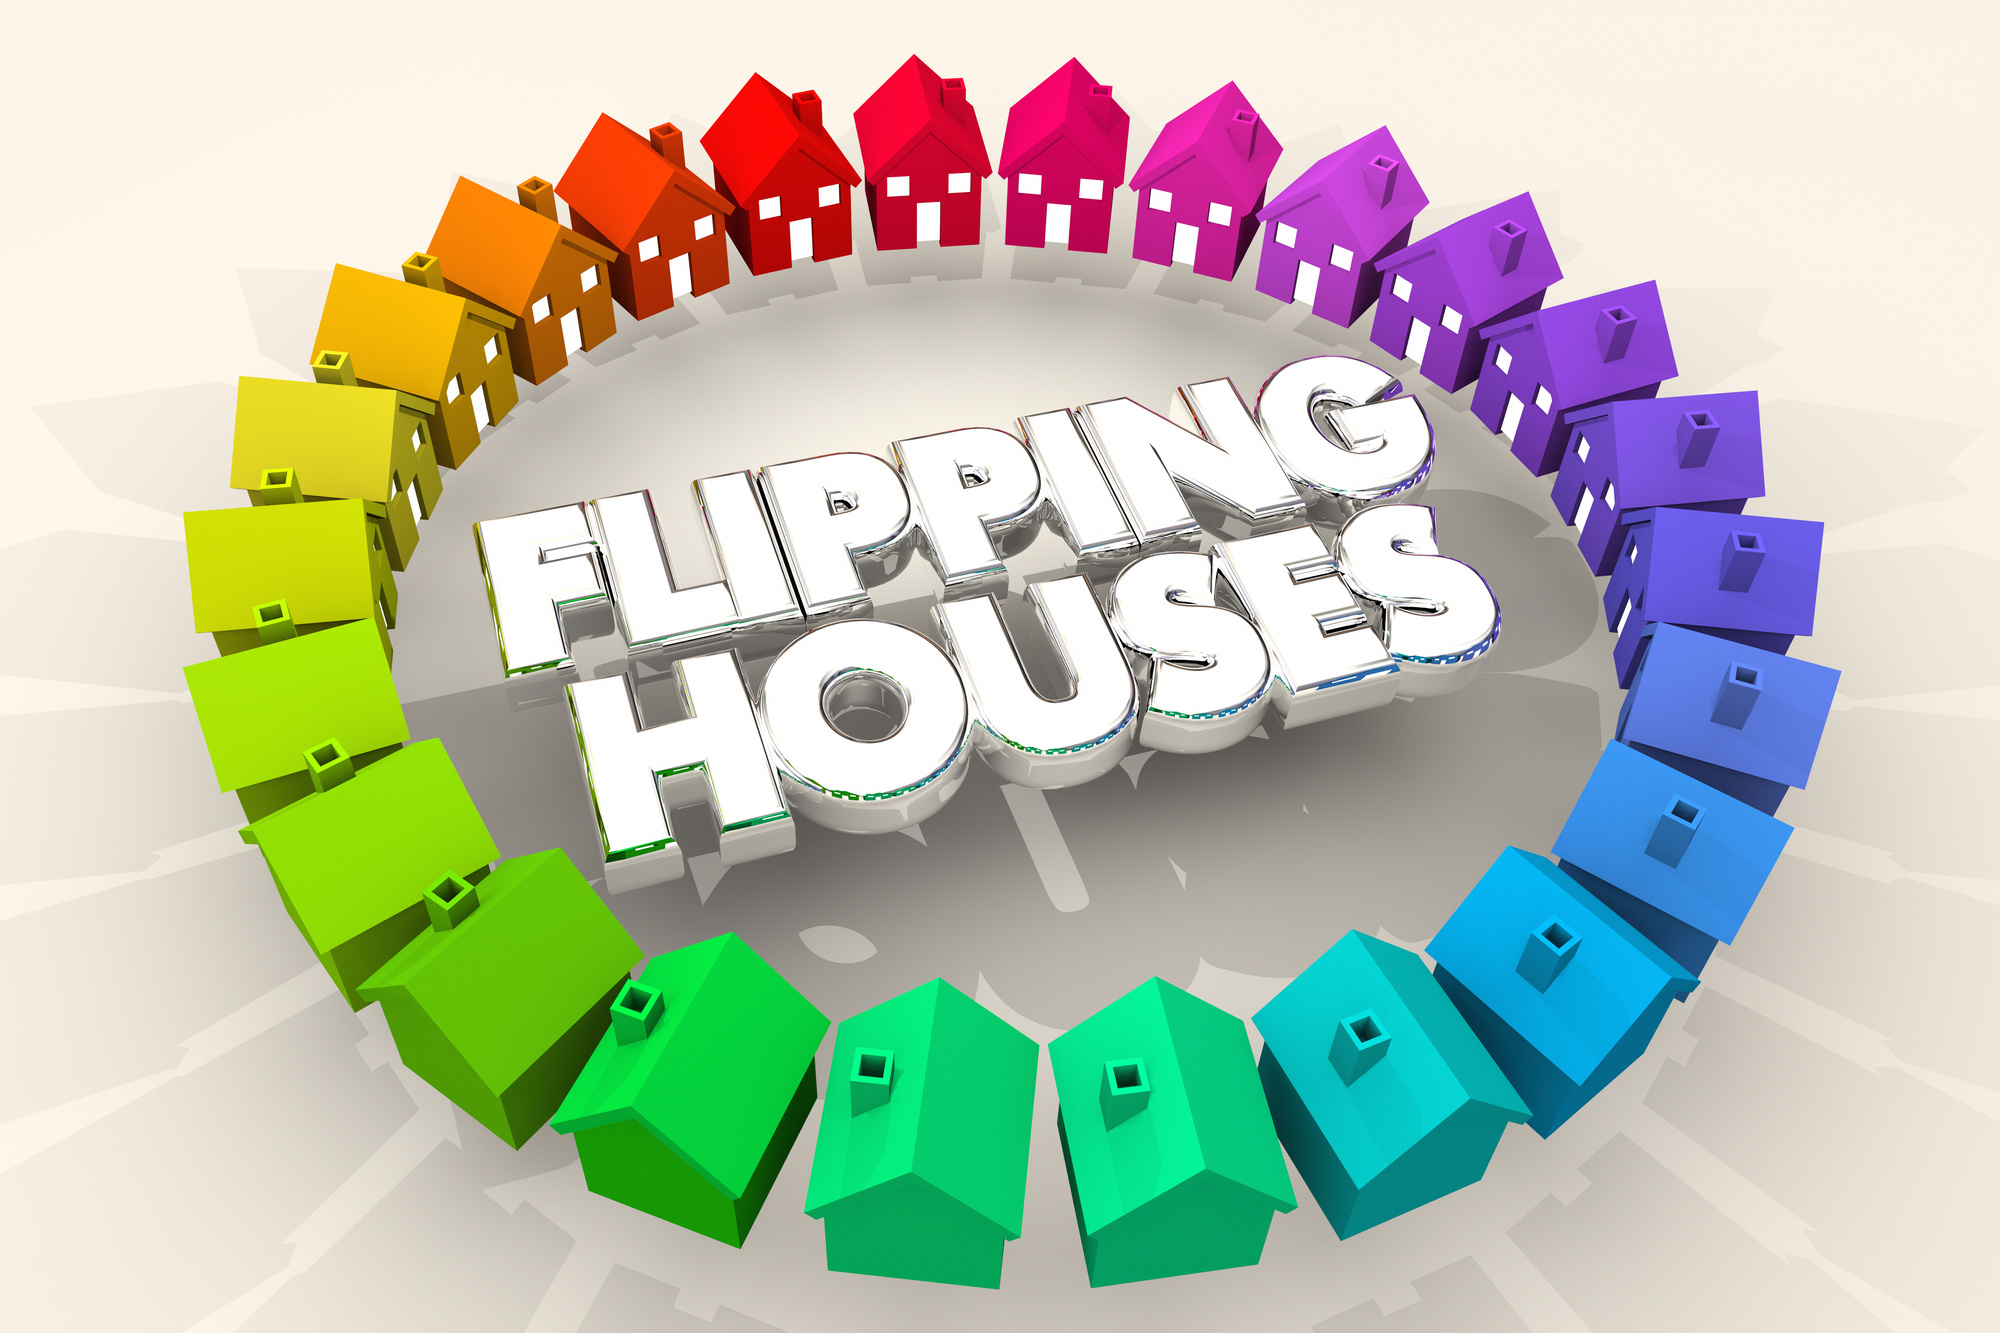 Flipping Houses Visualized